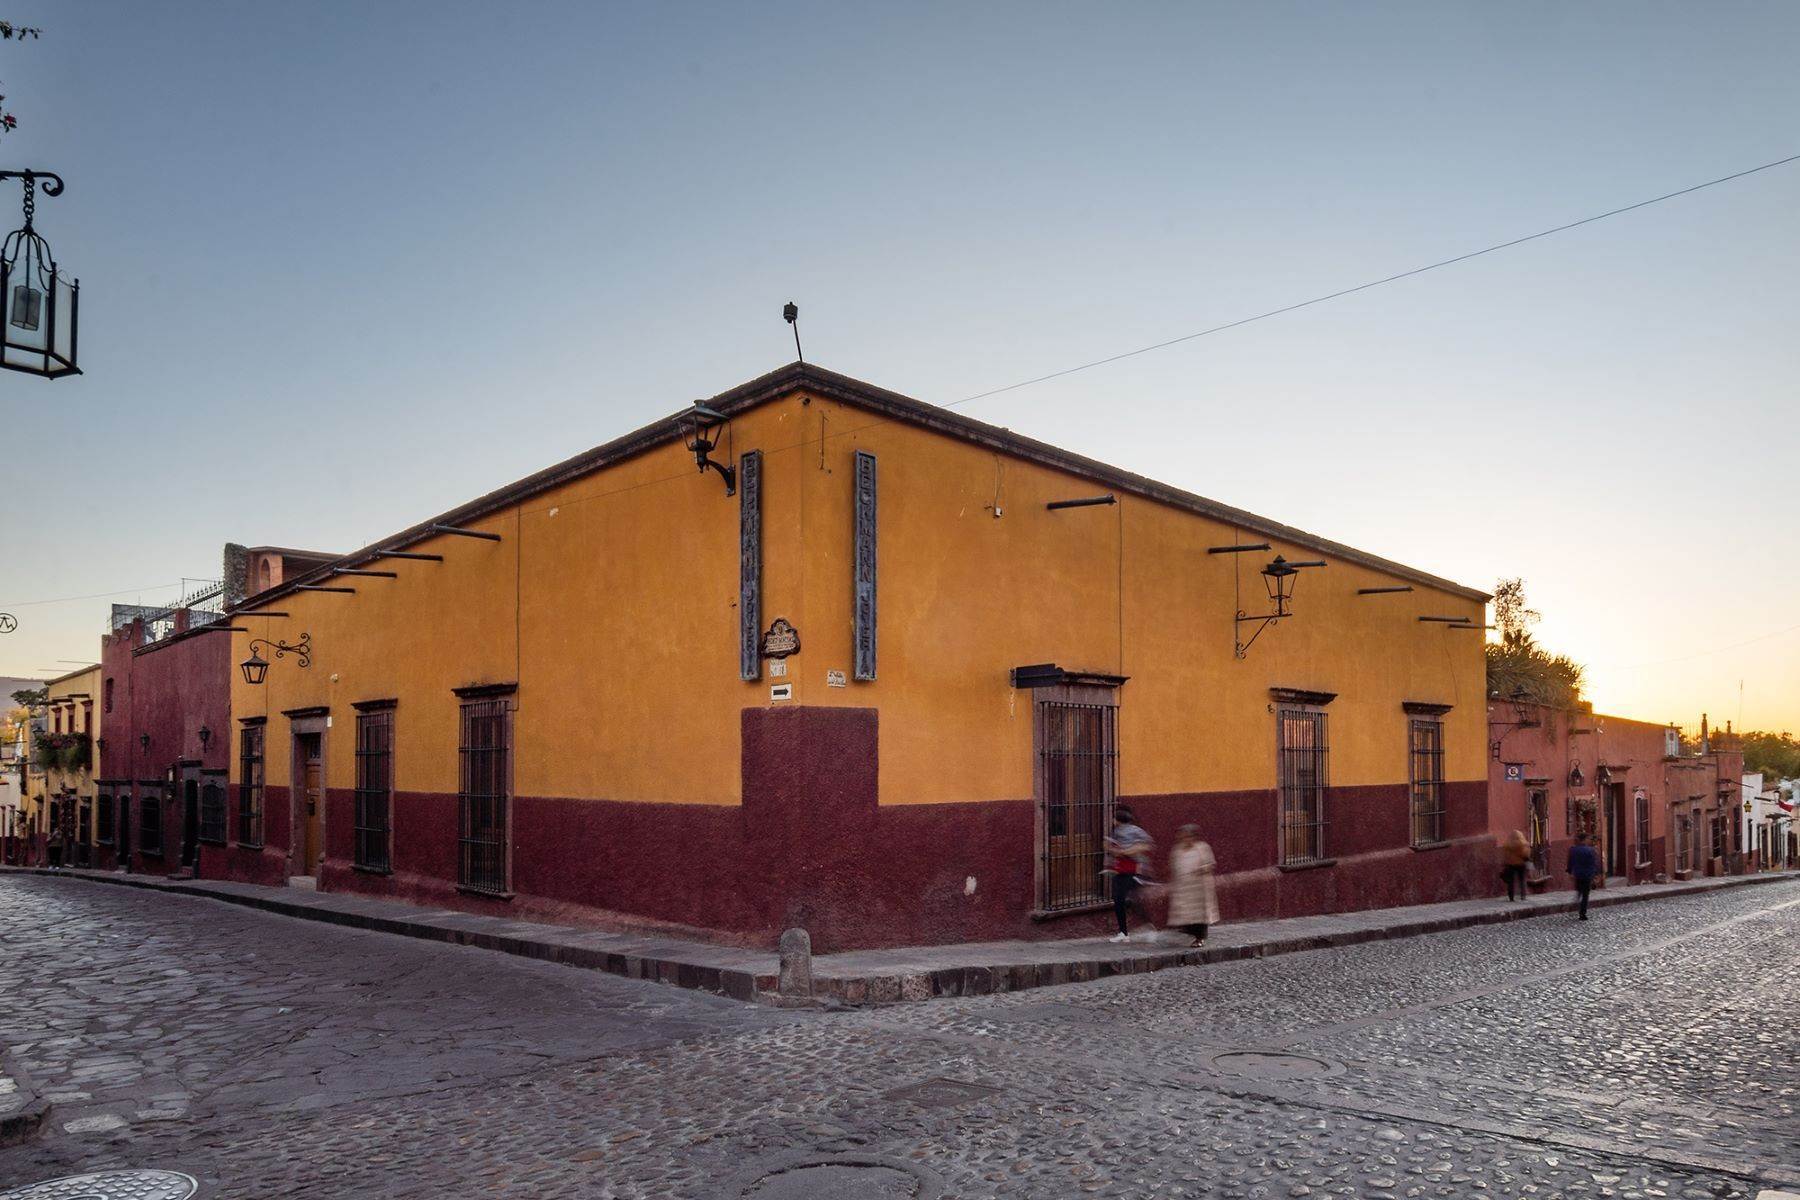 Property for Sale at THE BECKMANN HOME San Miguel De Allende, Guanajuato 37700 Mexico